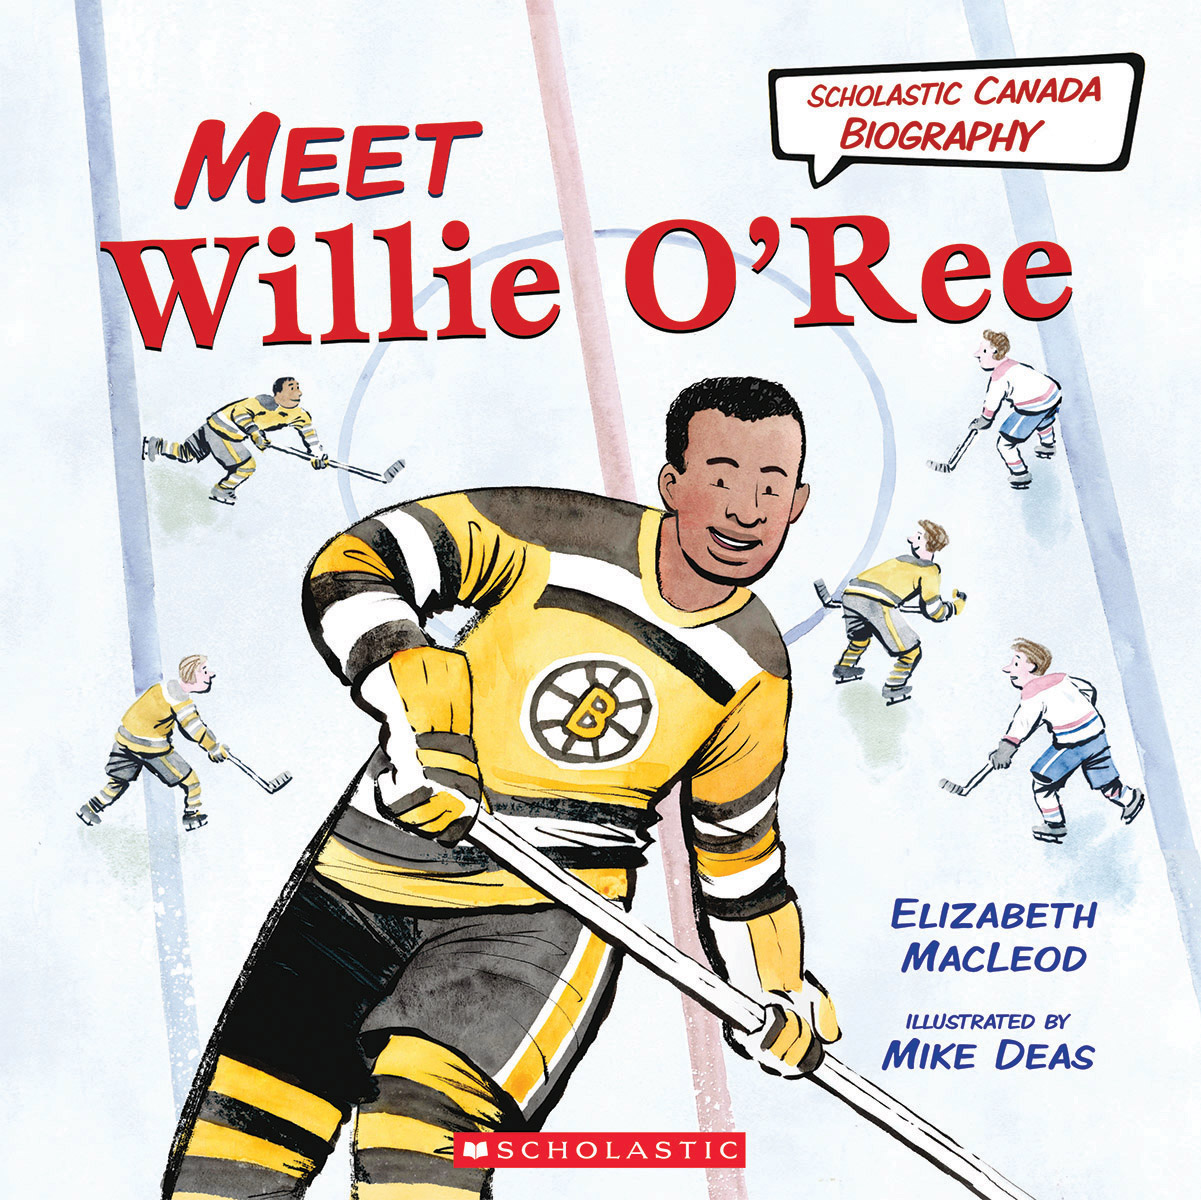 Scholastic Canada Biography: Meet Willie O'Ree | MacLeod, Elizabeth